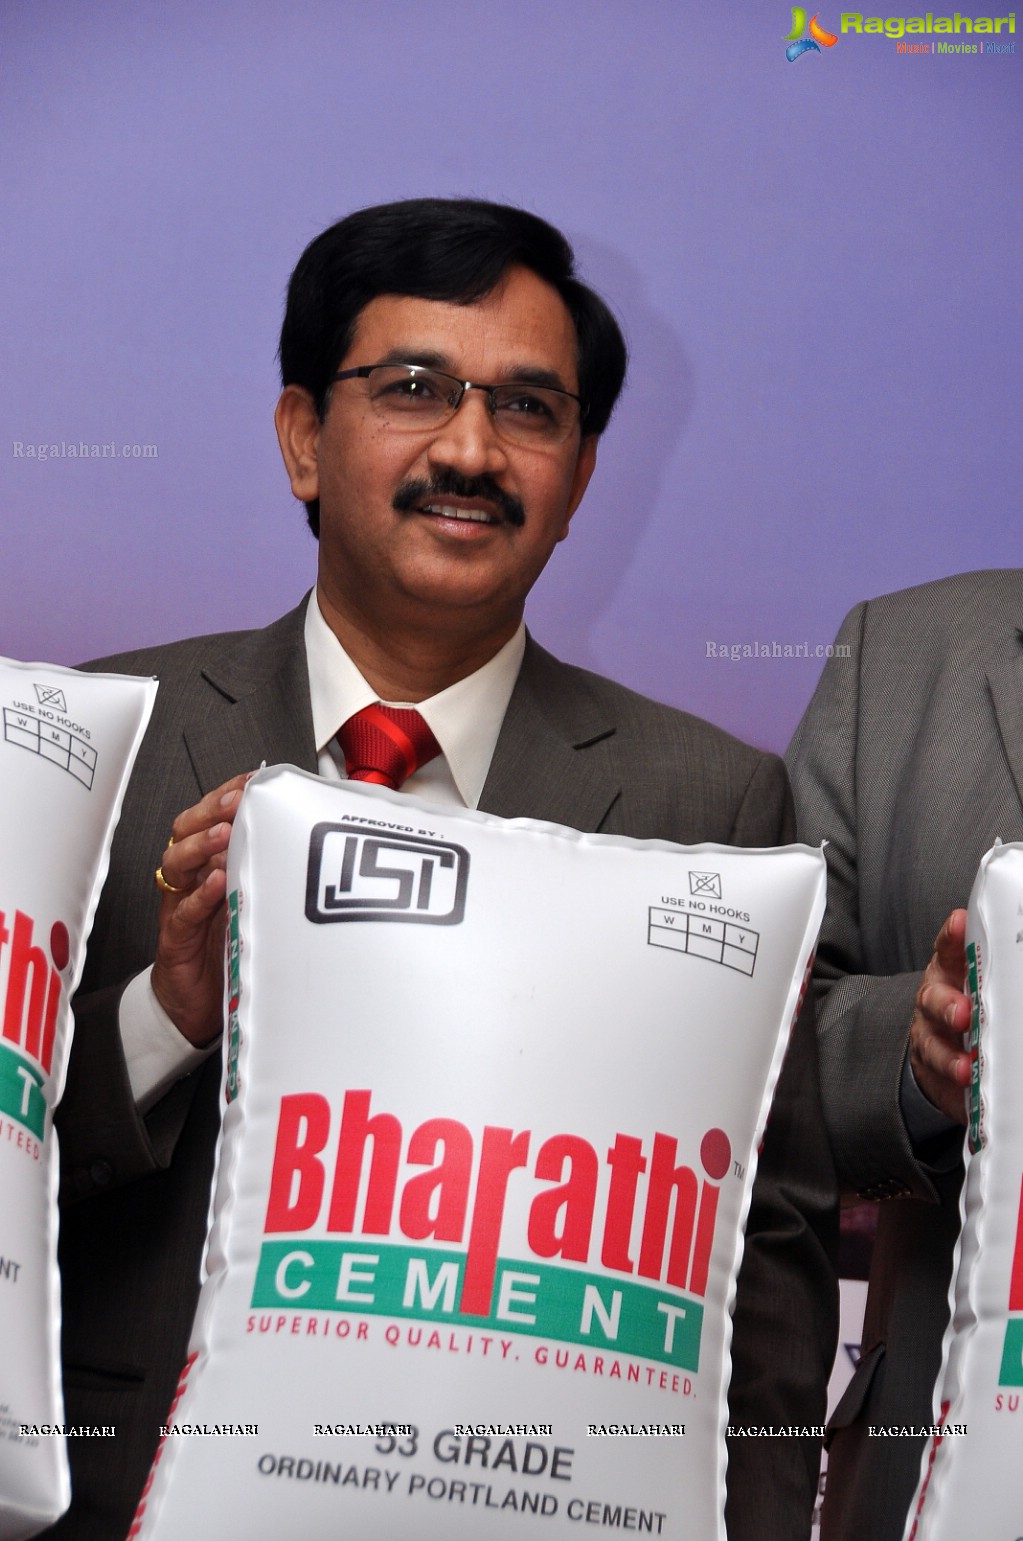 Bharathi Cement launch in the Telangana Region